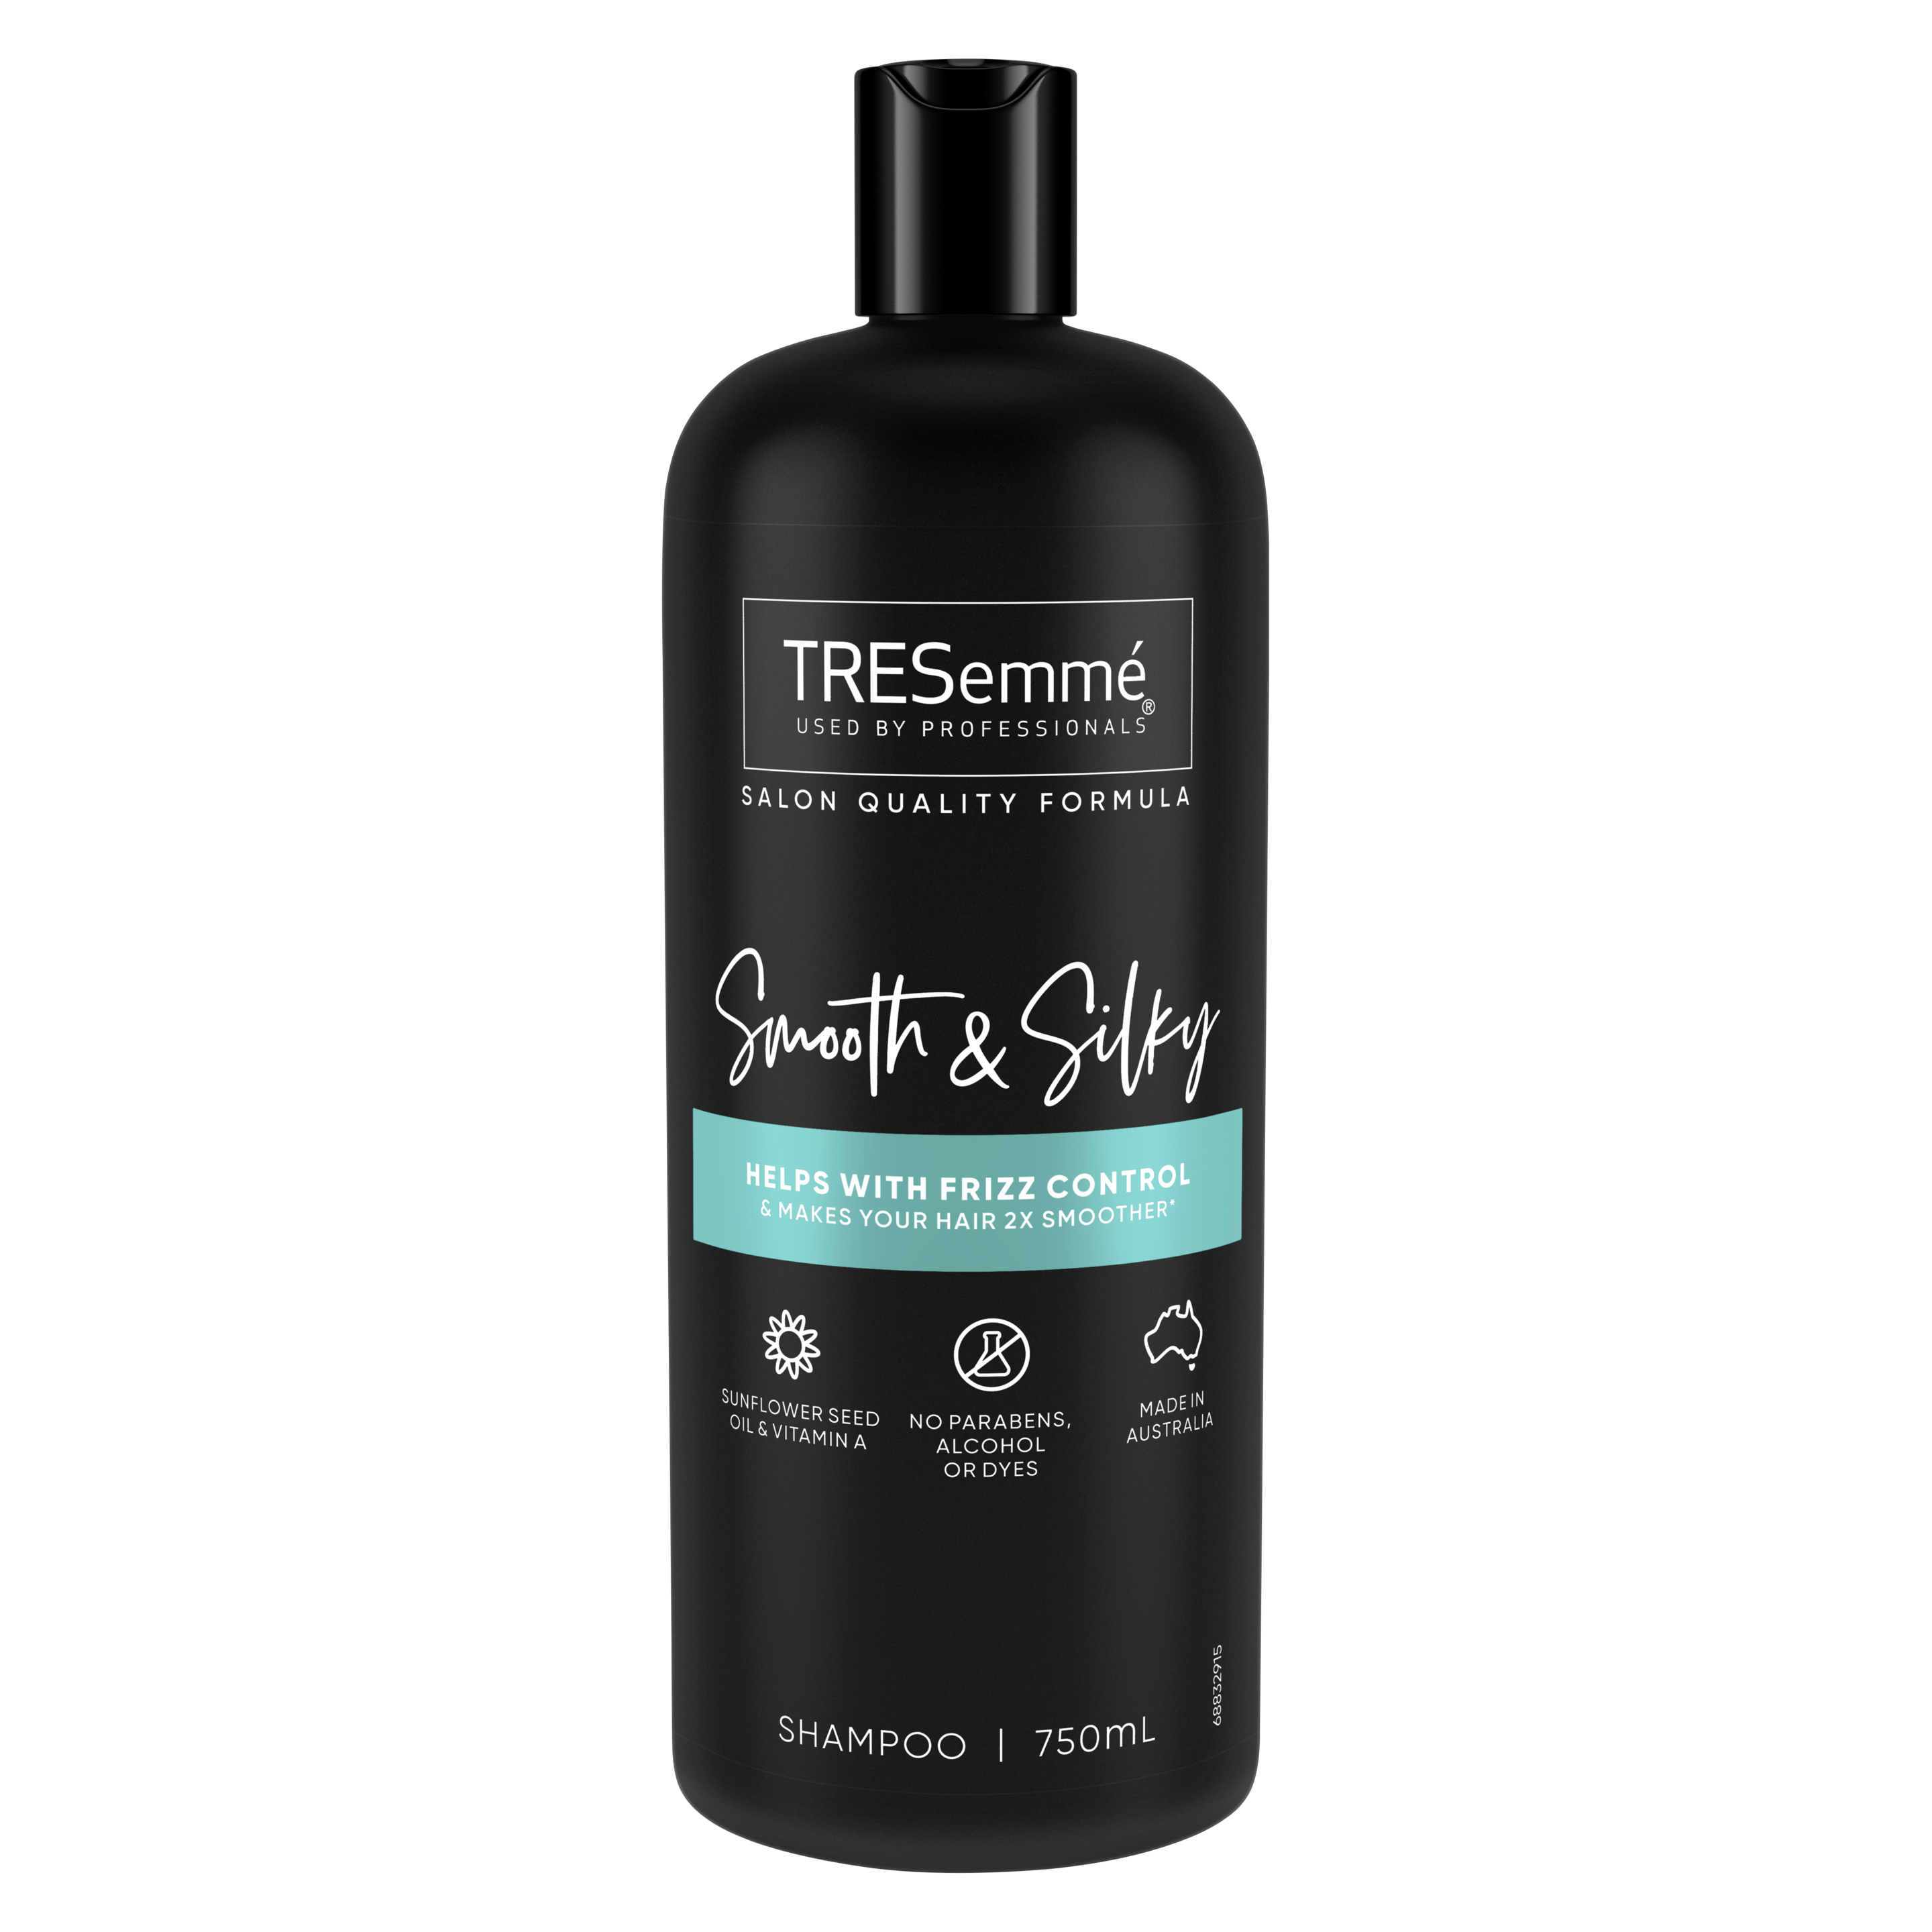 A 750ml bottle of TRESemmé Smooth & Silky Shampoo